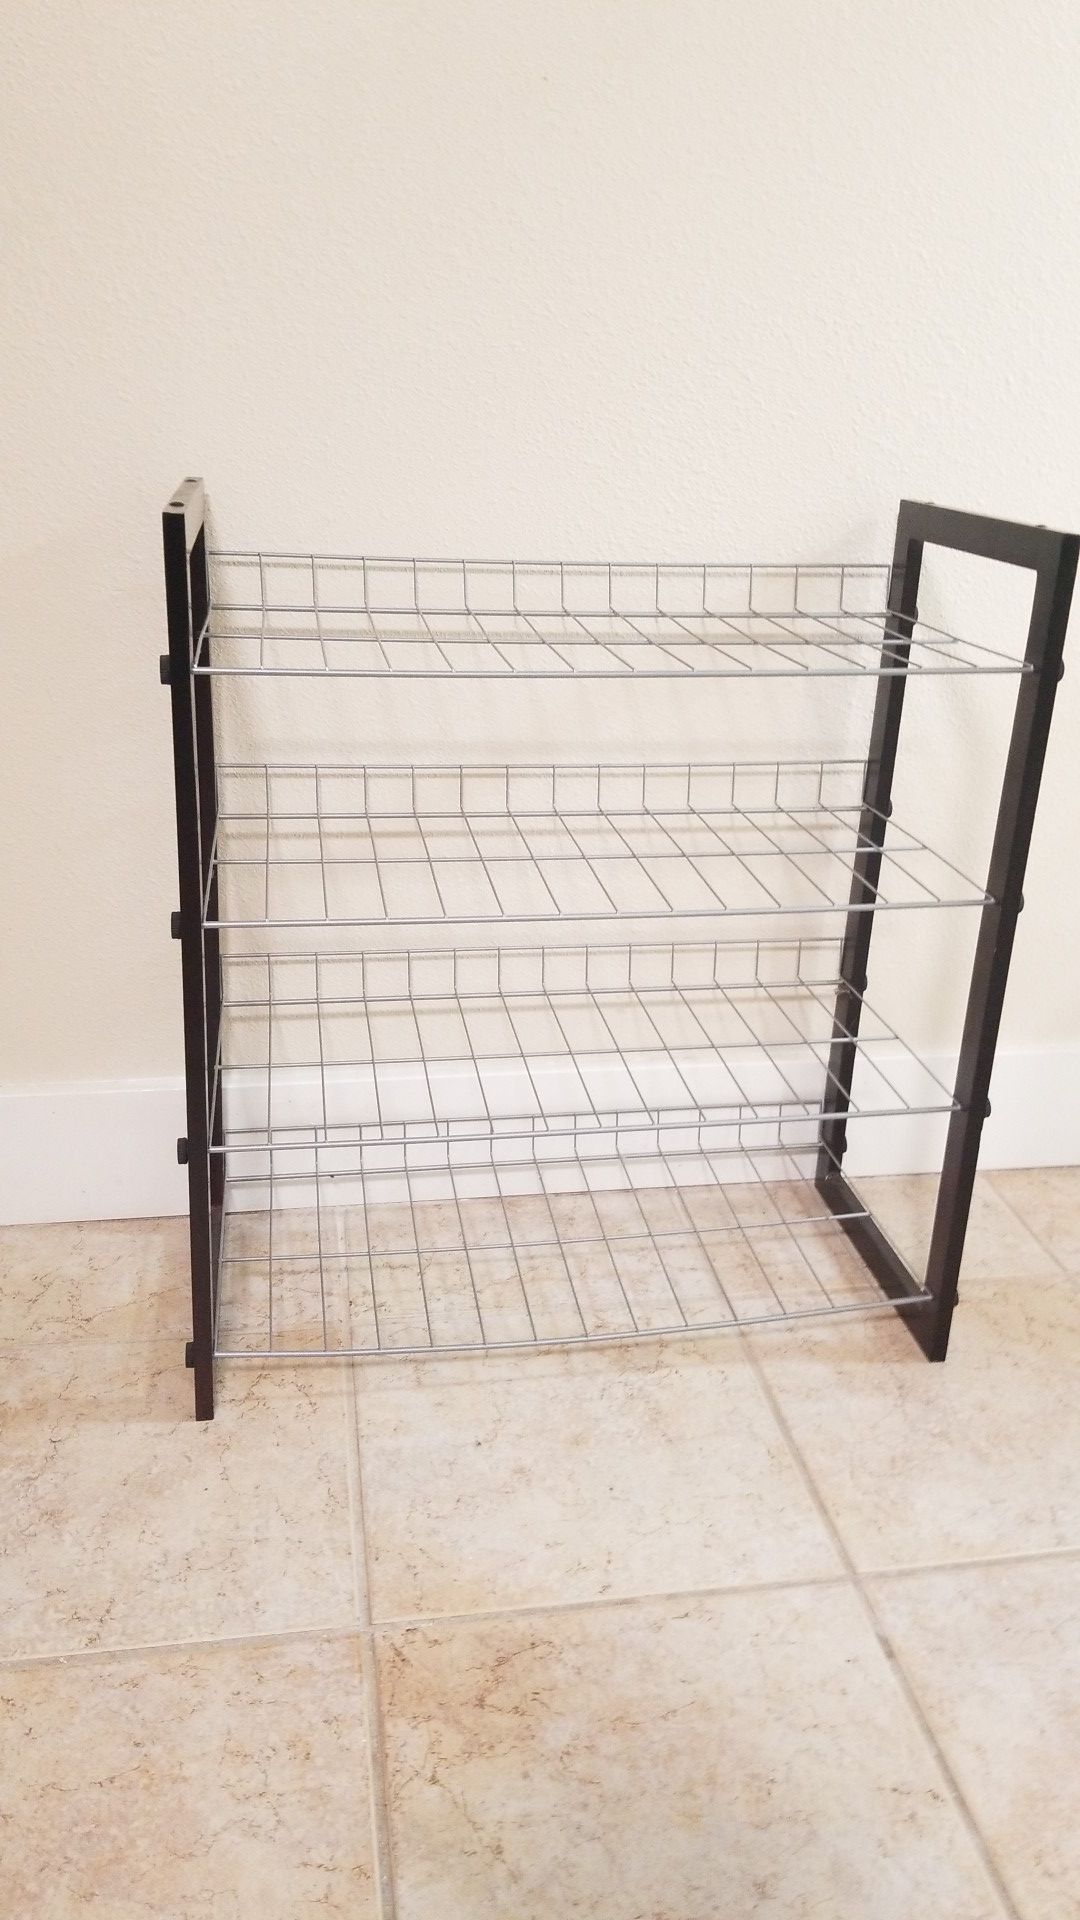 Small metal stand - 4 shelves